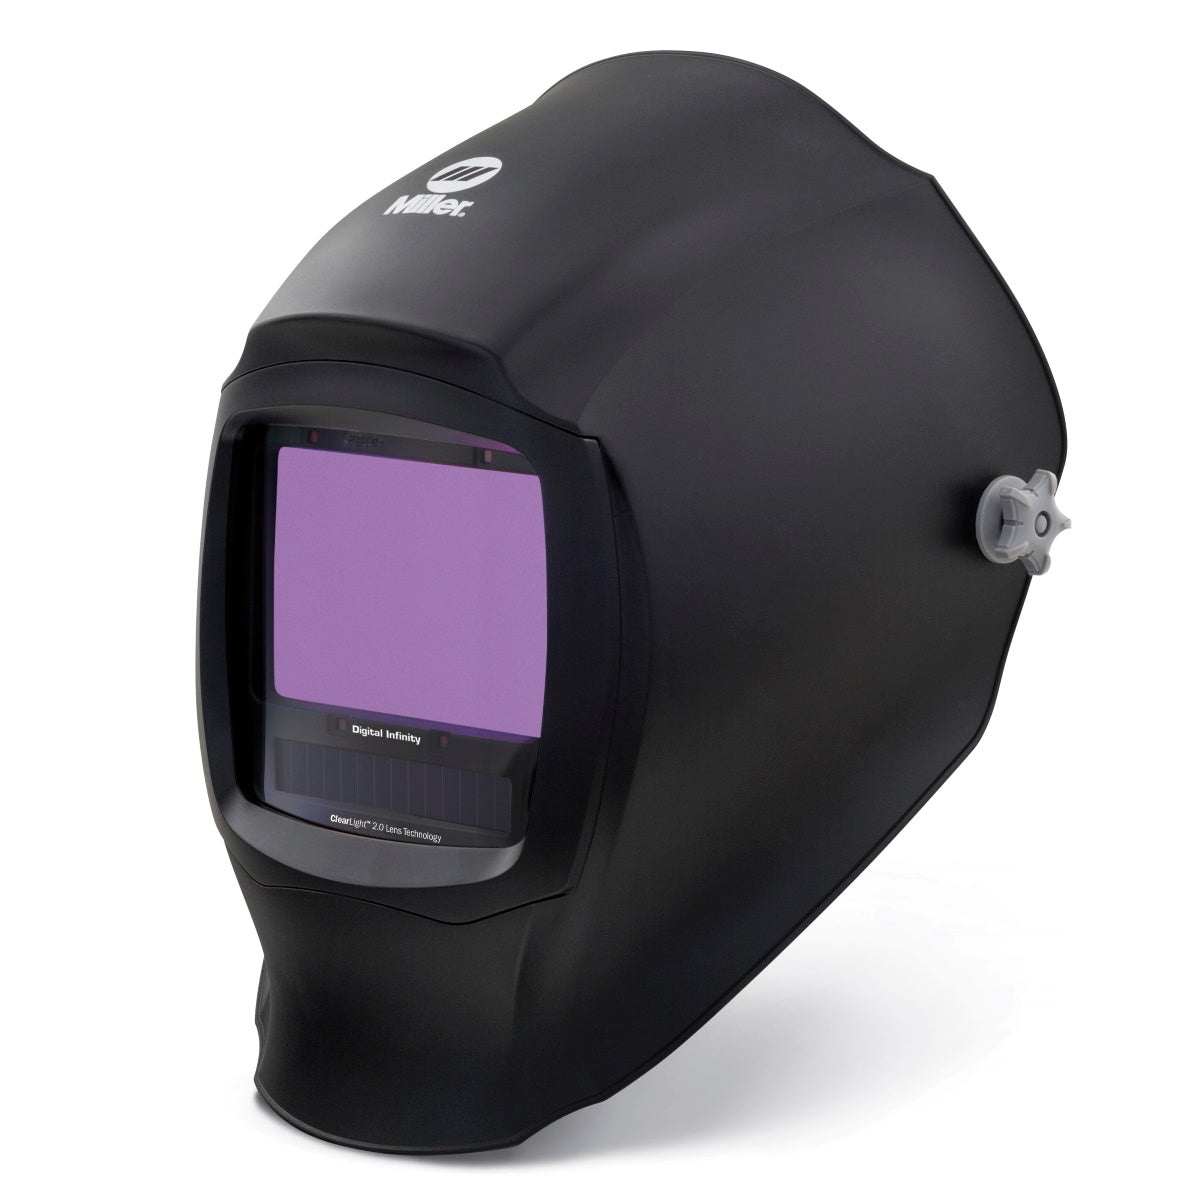 Miller Black Digital Infinity Welding Helmet w/ClearLight 2.0 Lens - 289714